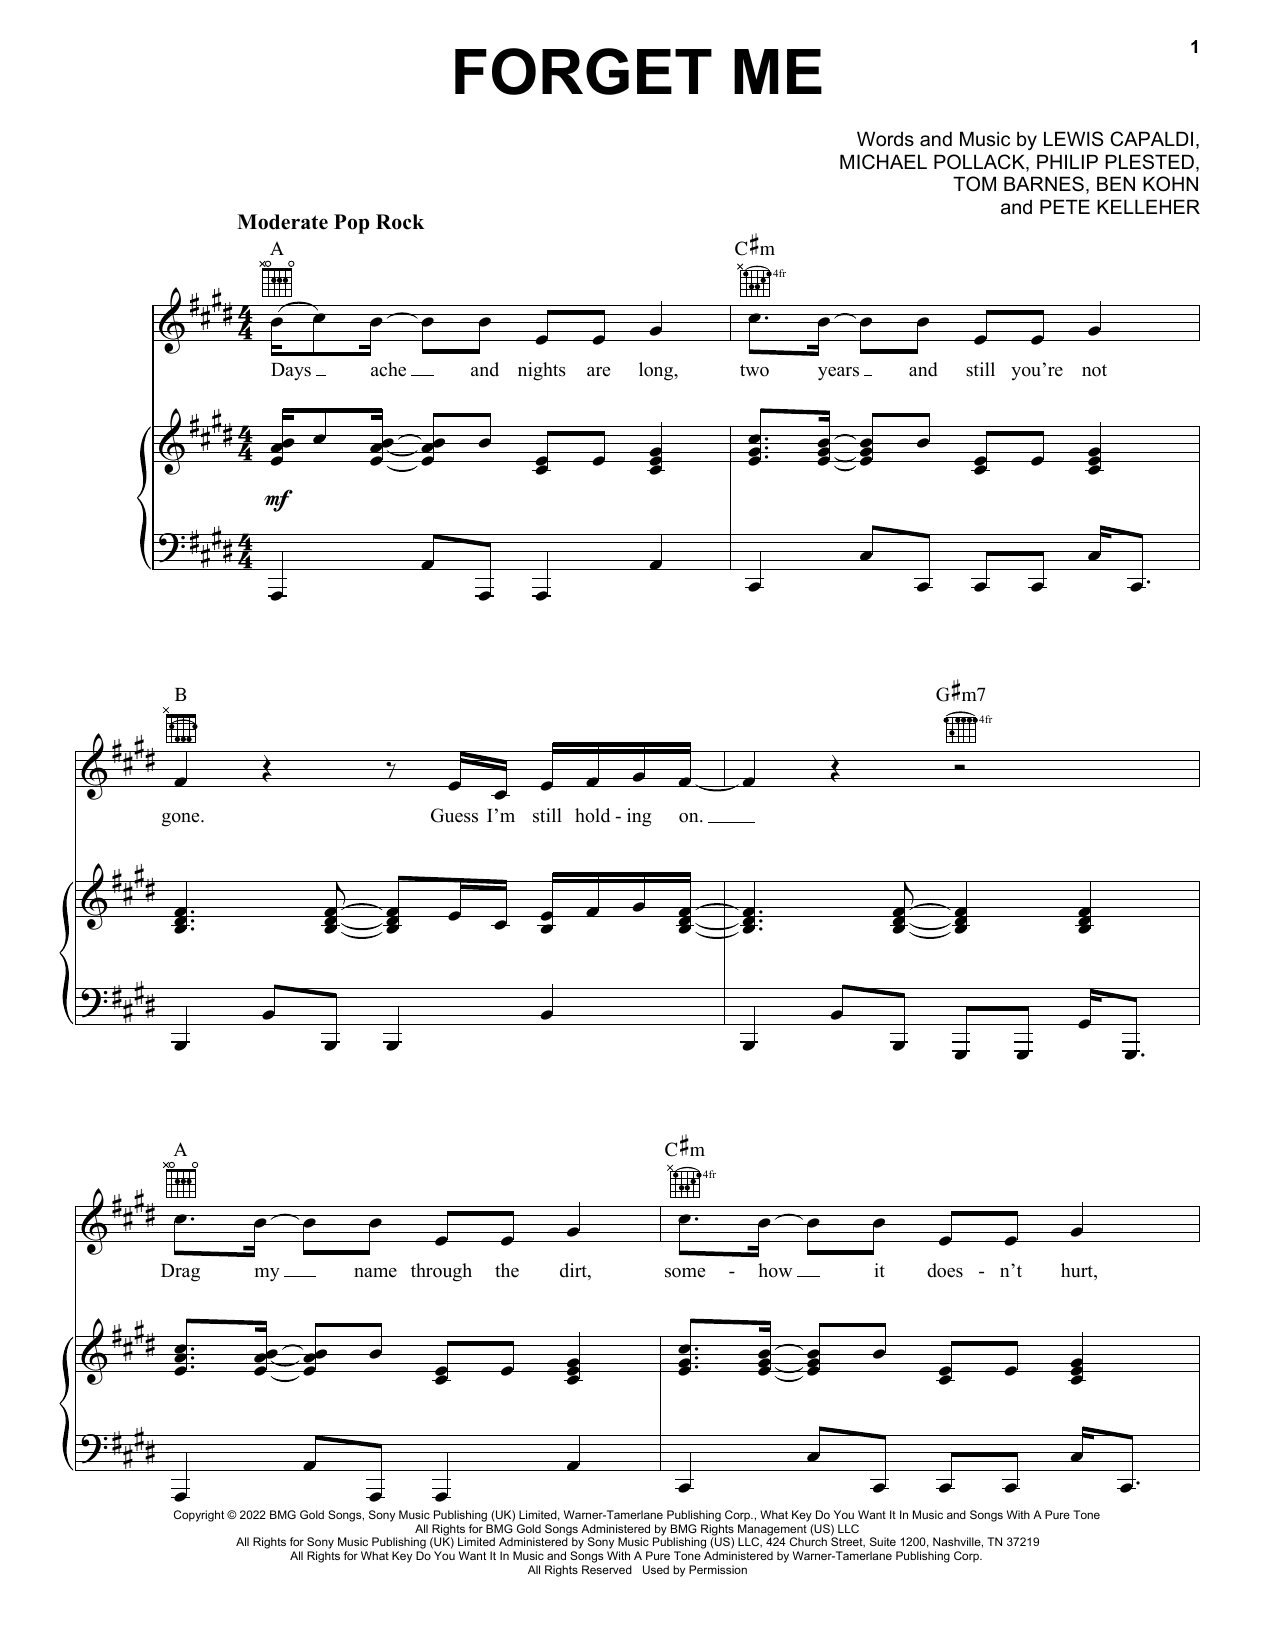 Lewis Capaldi Forget Me Sheet Music Notes & Chords for Ukulele - Download or Print PDF